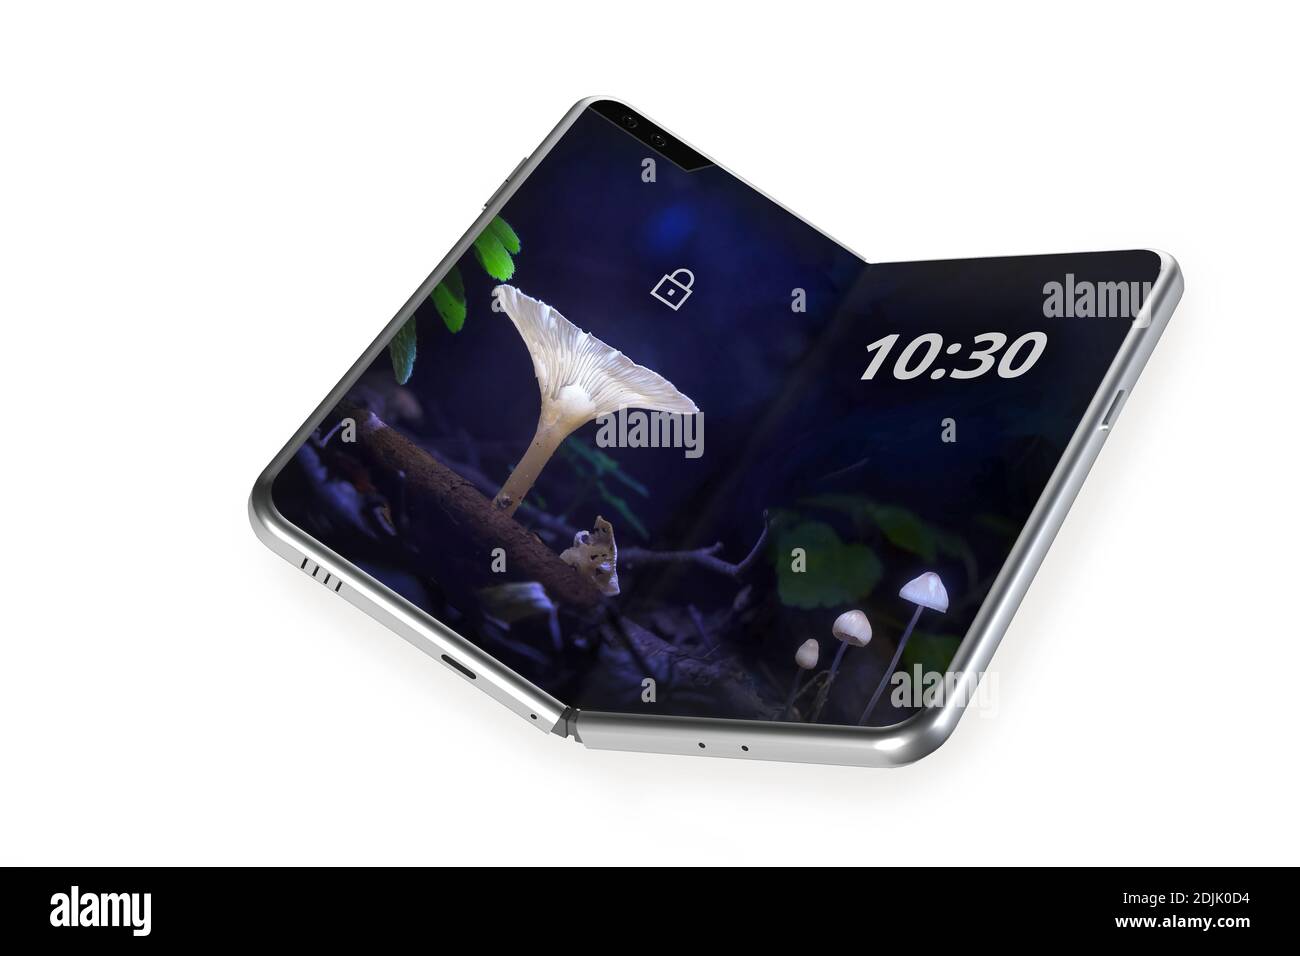 Faltbares Smartphone mit flexiblem Bildschirm - 3d Rendering Illustration Stockfoto